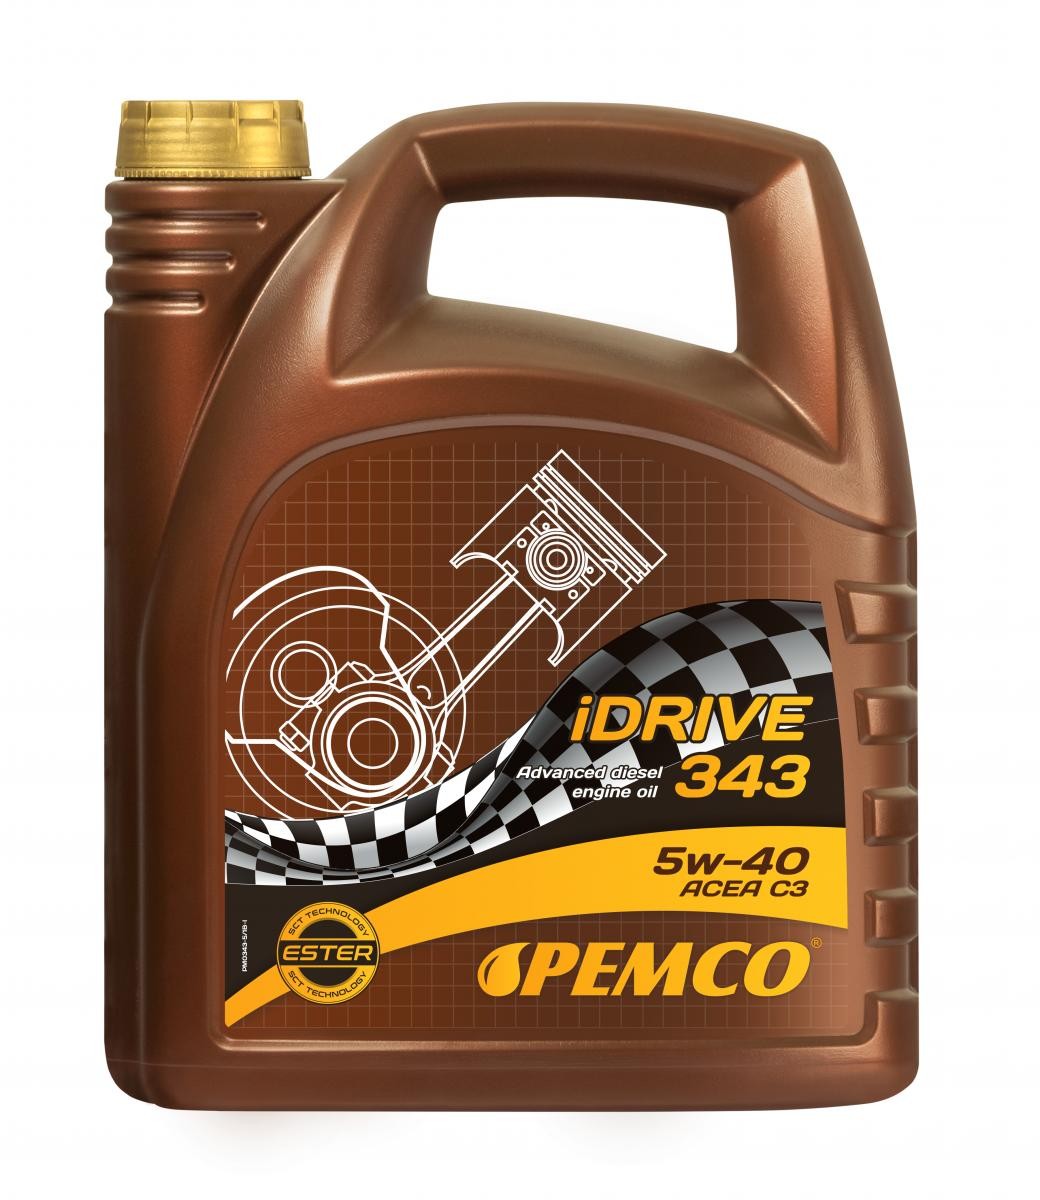 Auto oil PEMCO 5W-40, 5l, Synthetic Oil longlife PM0343-5